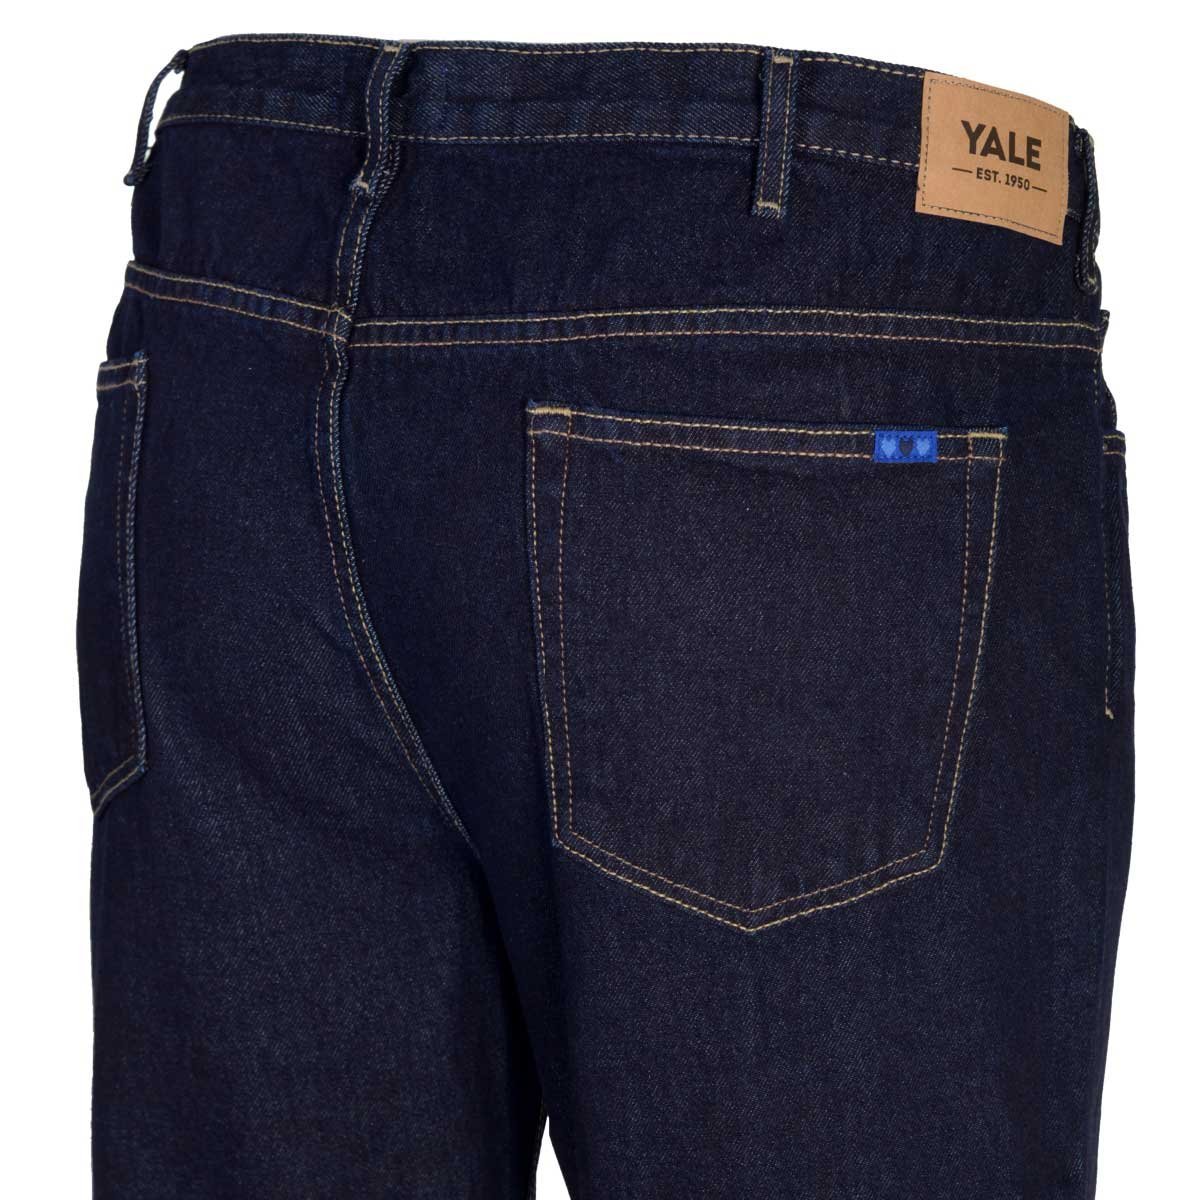 Jeans Teñido Yale